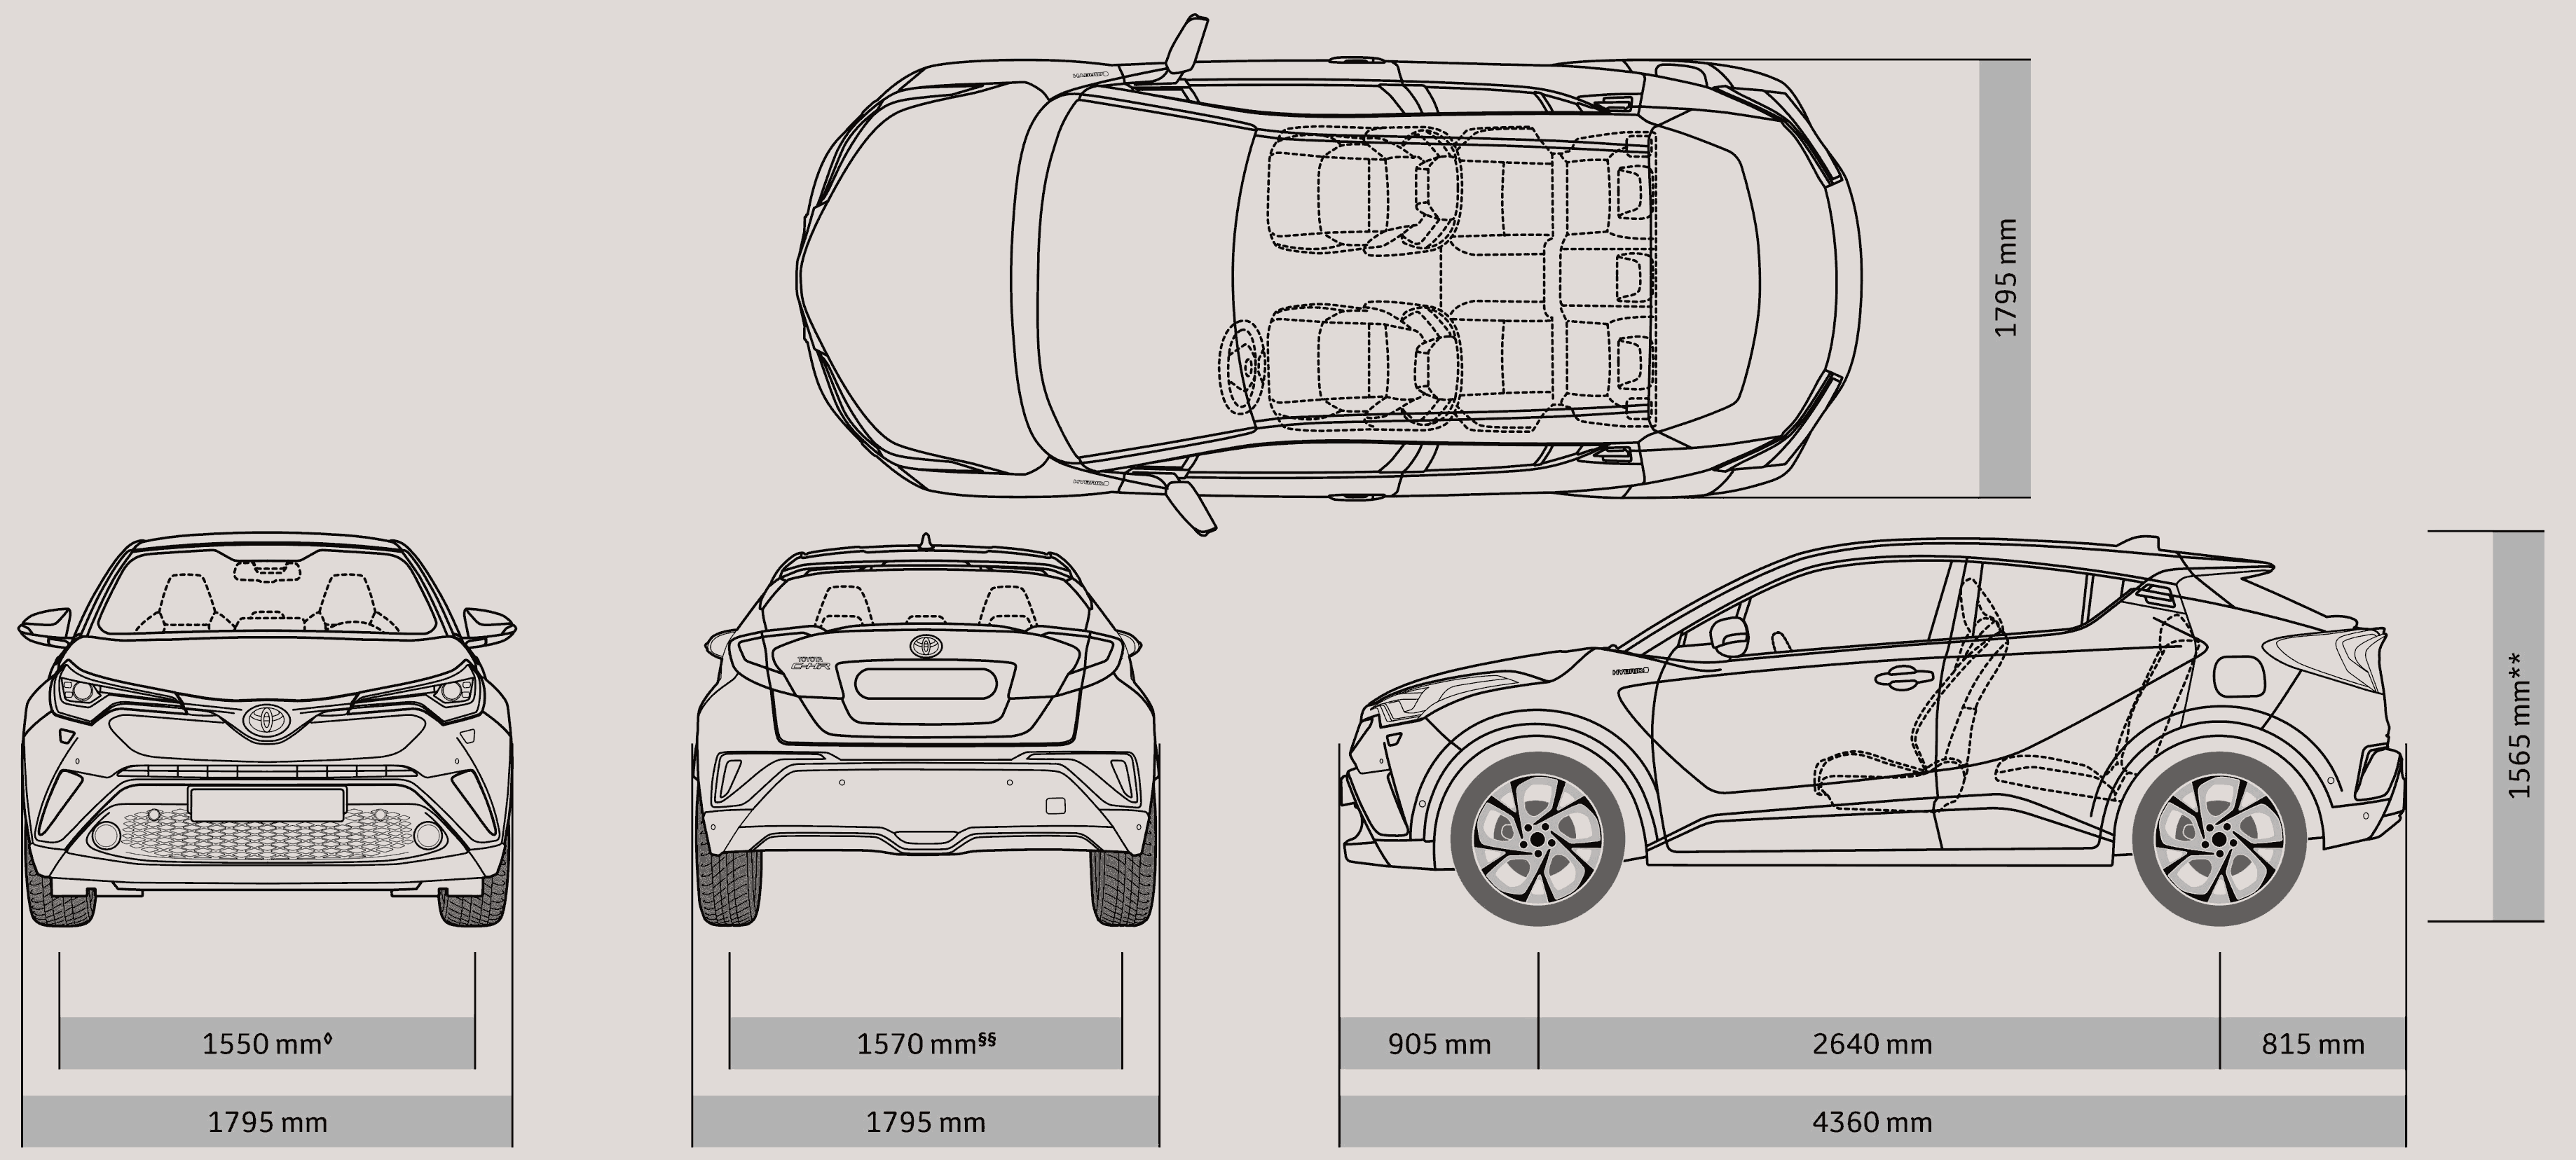 Toyota C-HR blueprint